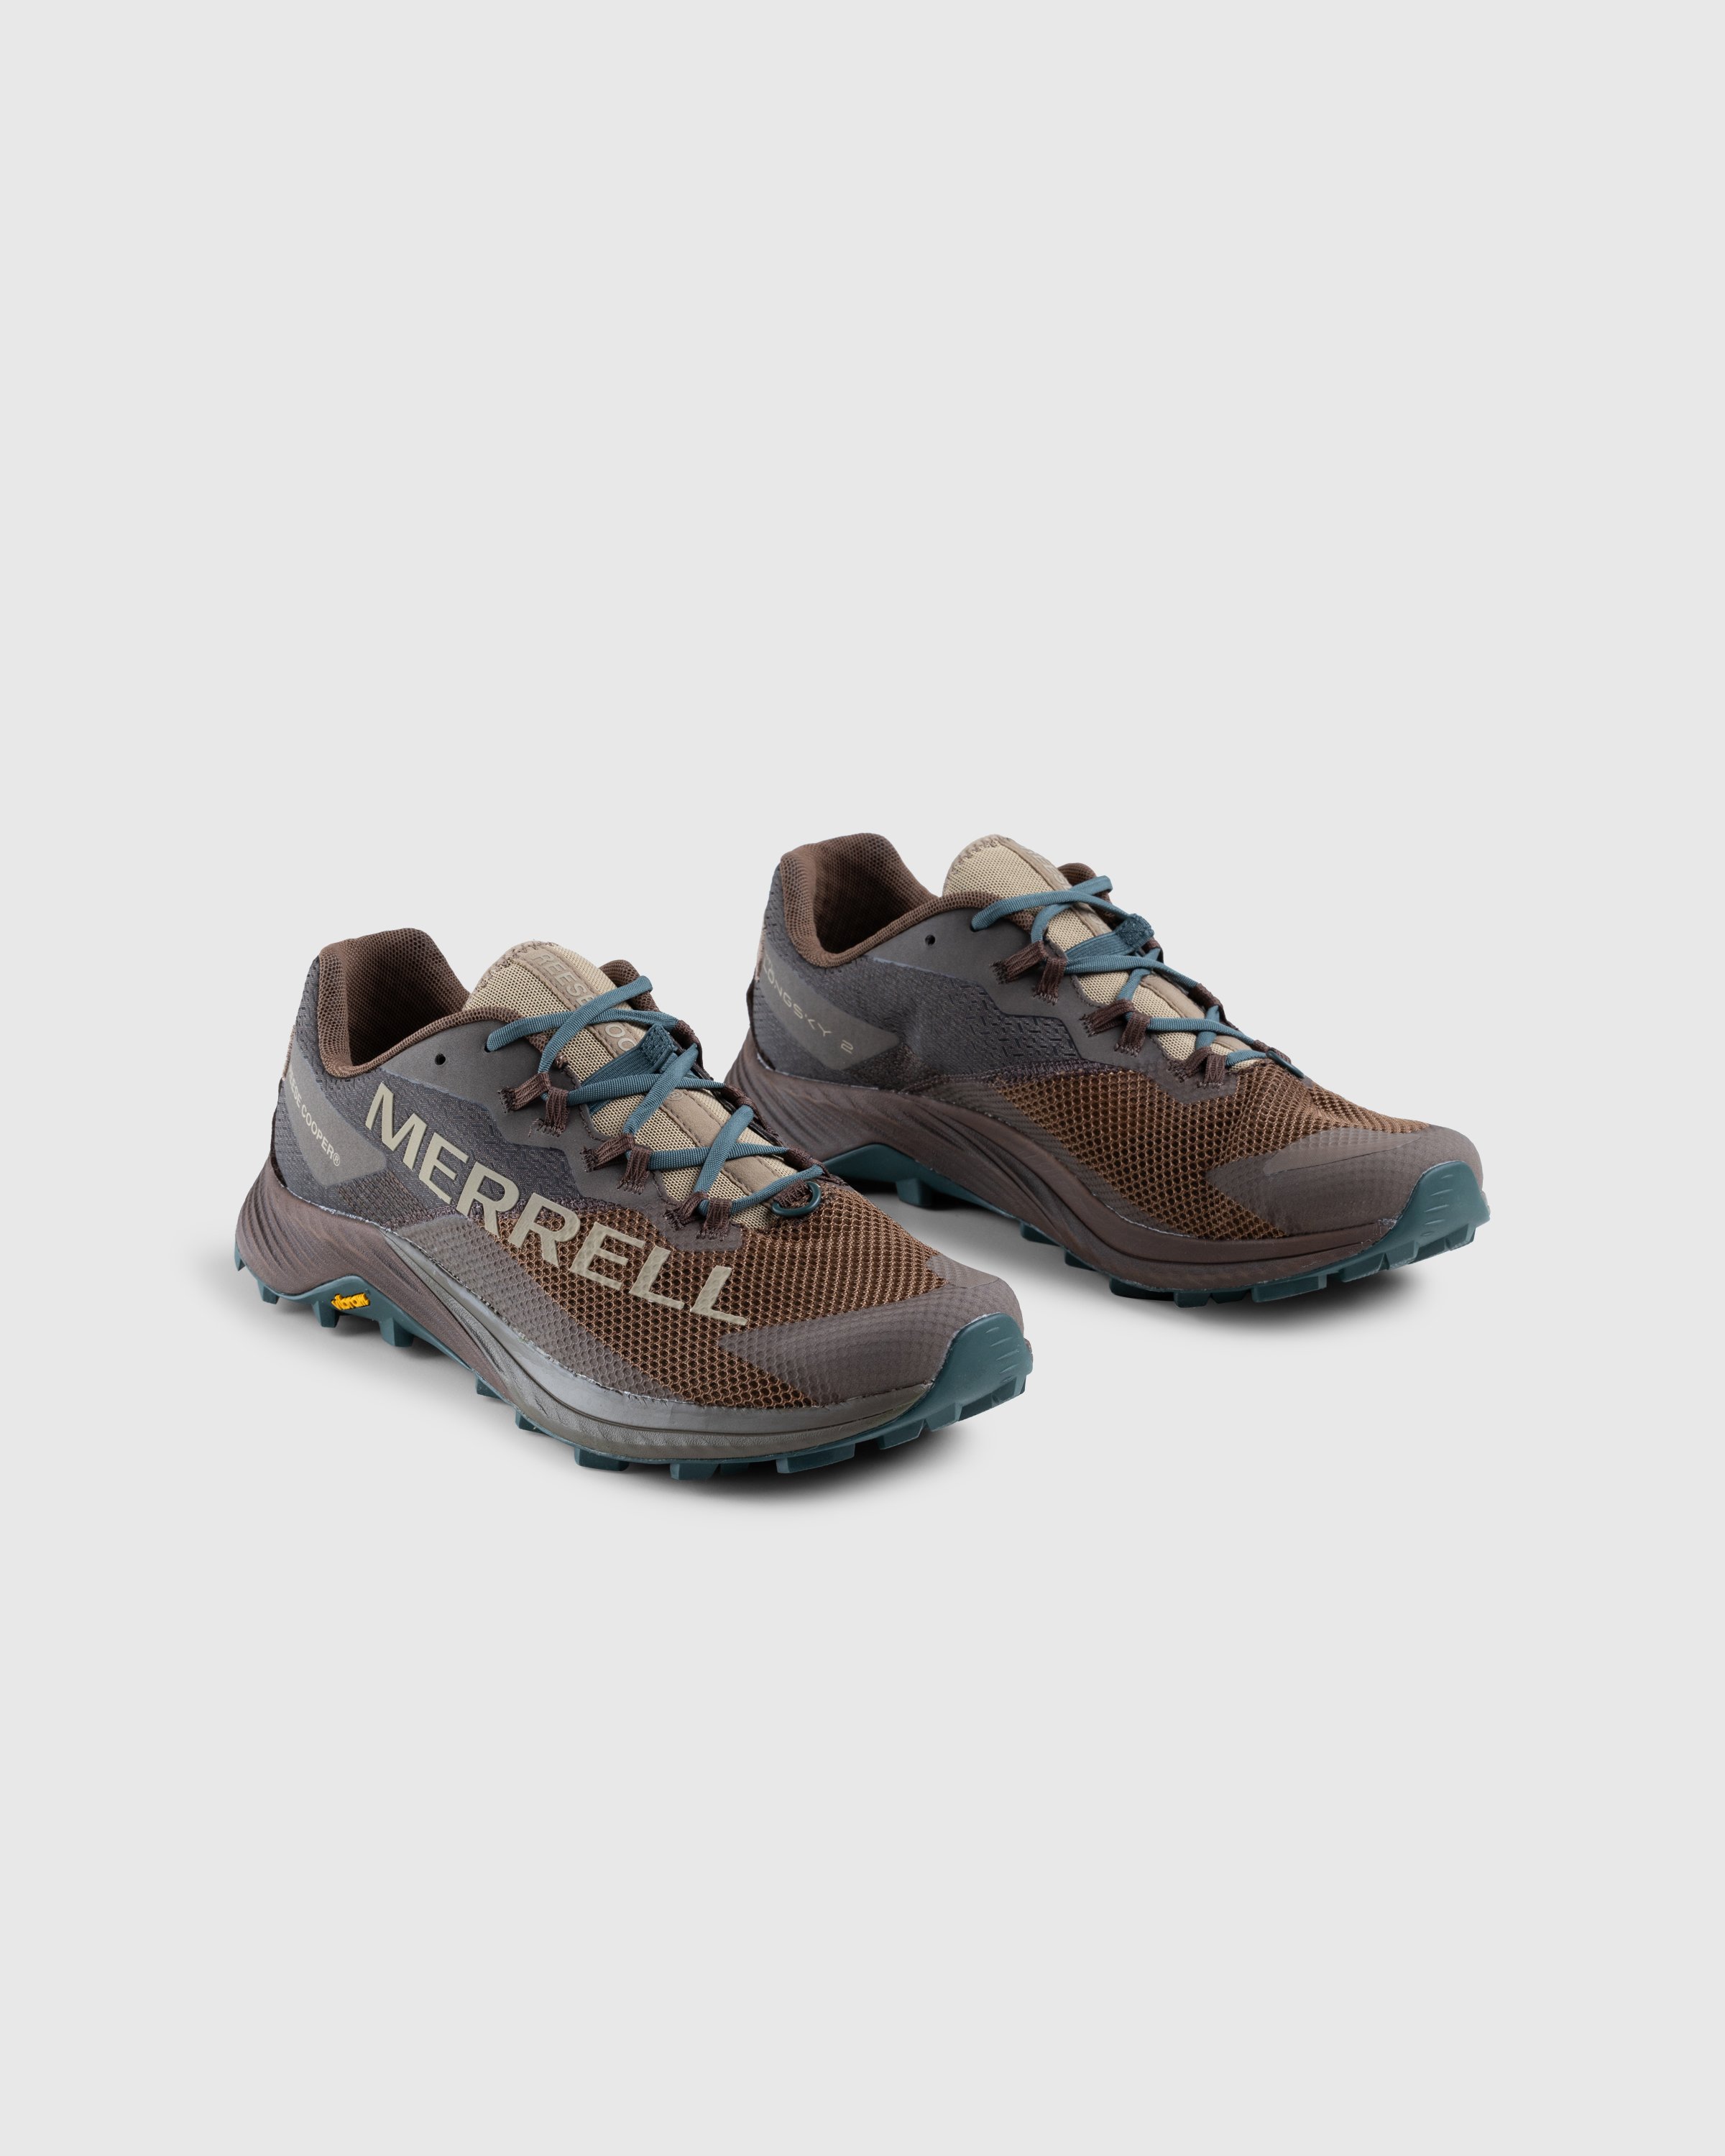 Merrell x Reese Cooper - MTL Long Sky 2 Otter Brown - Footwear - Brown - Image 3